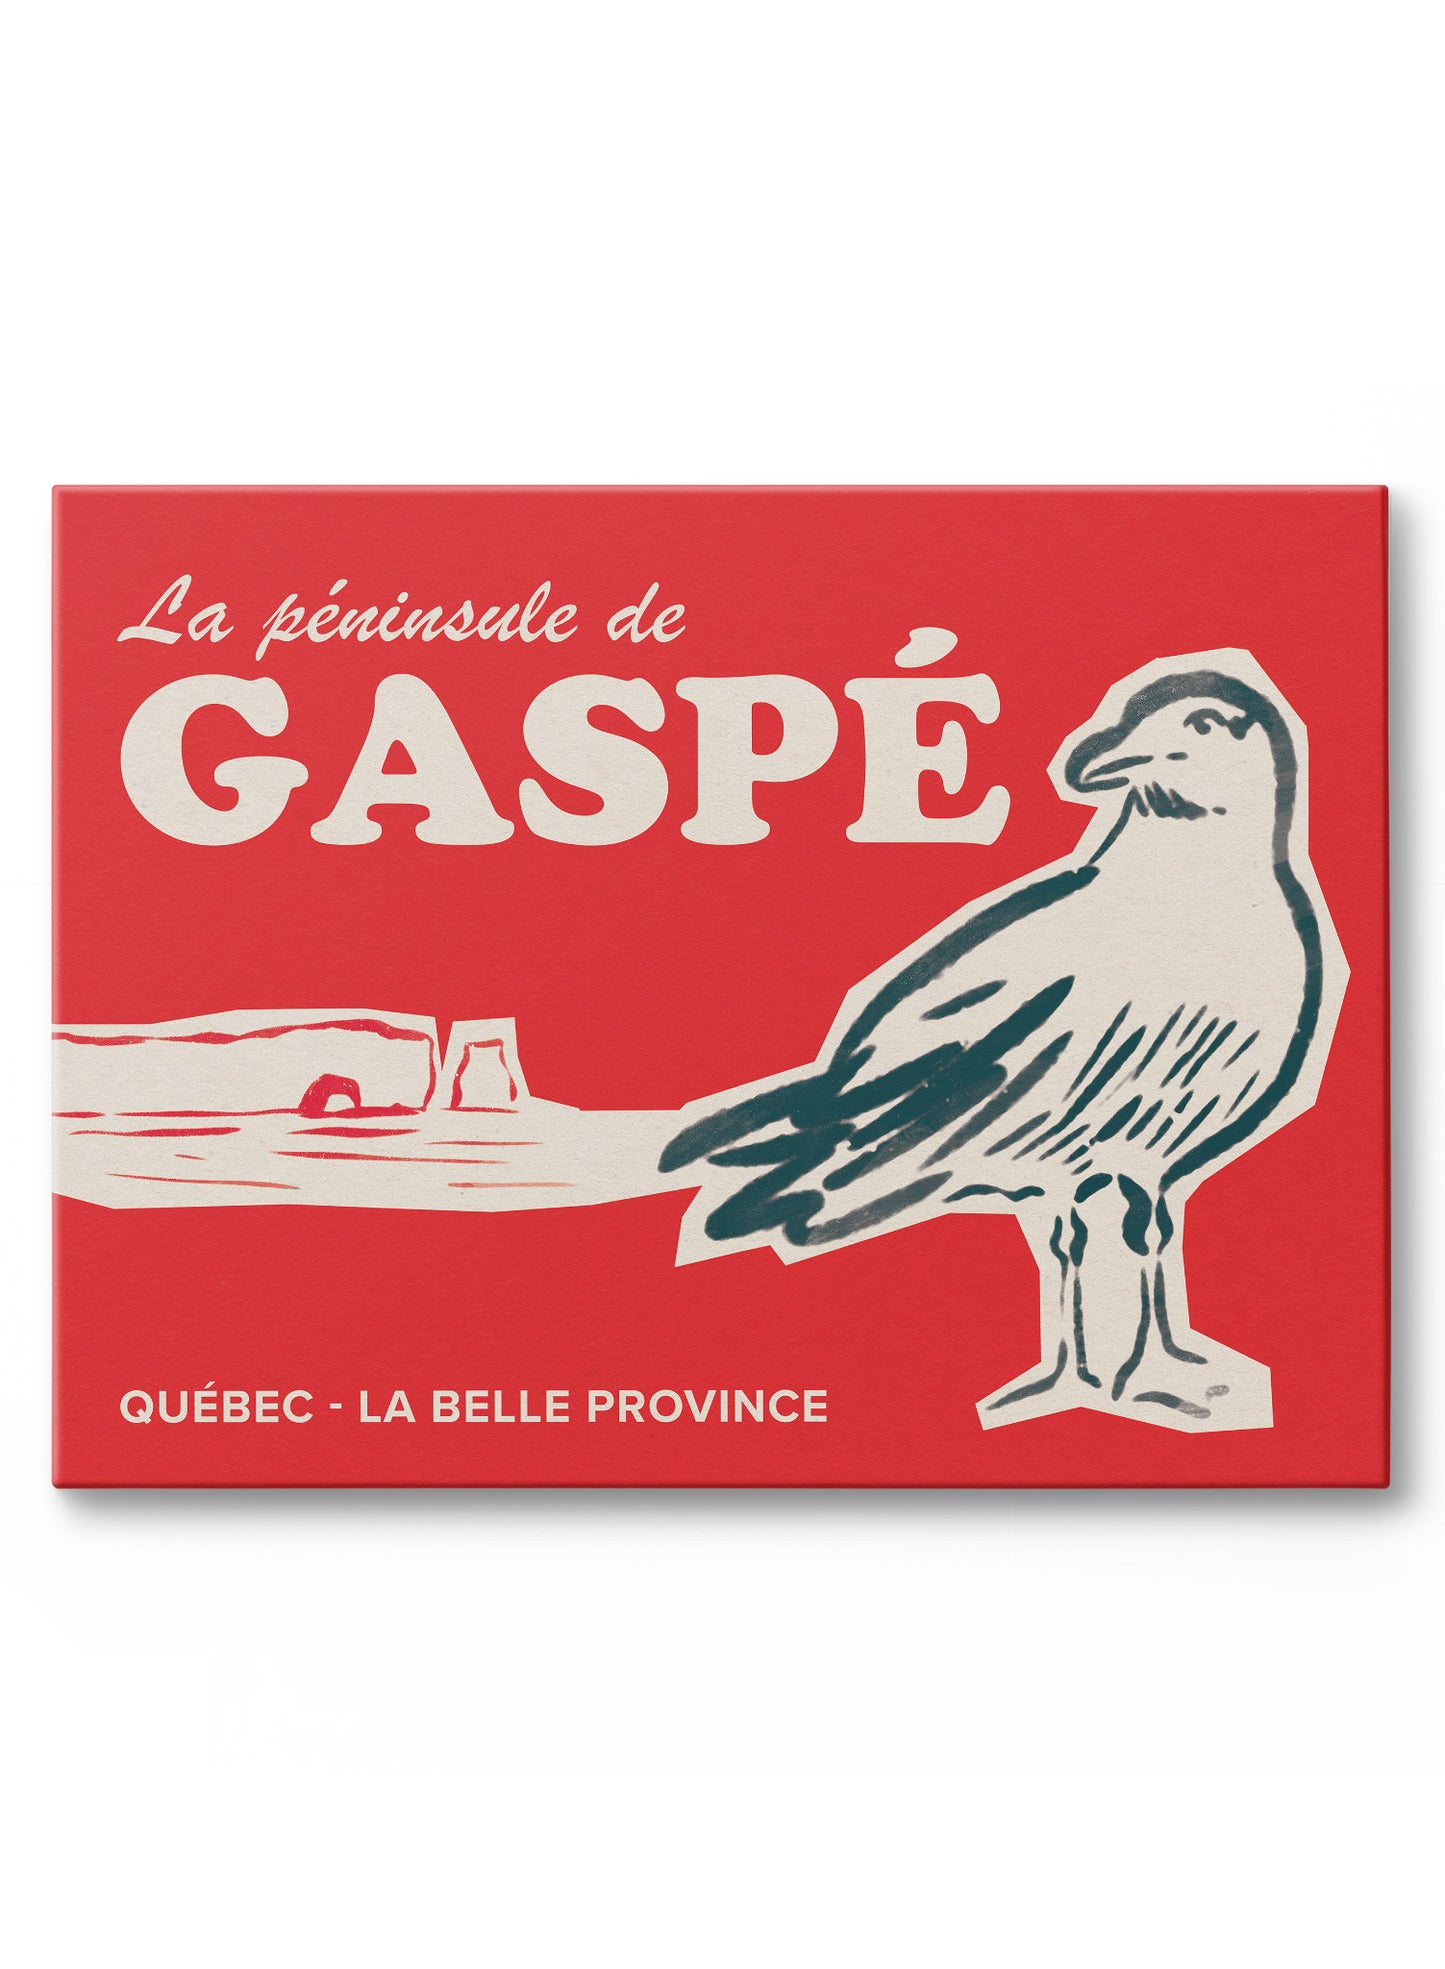 Gaspesian Seagull, Poster